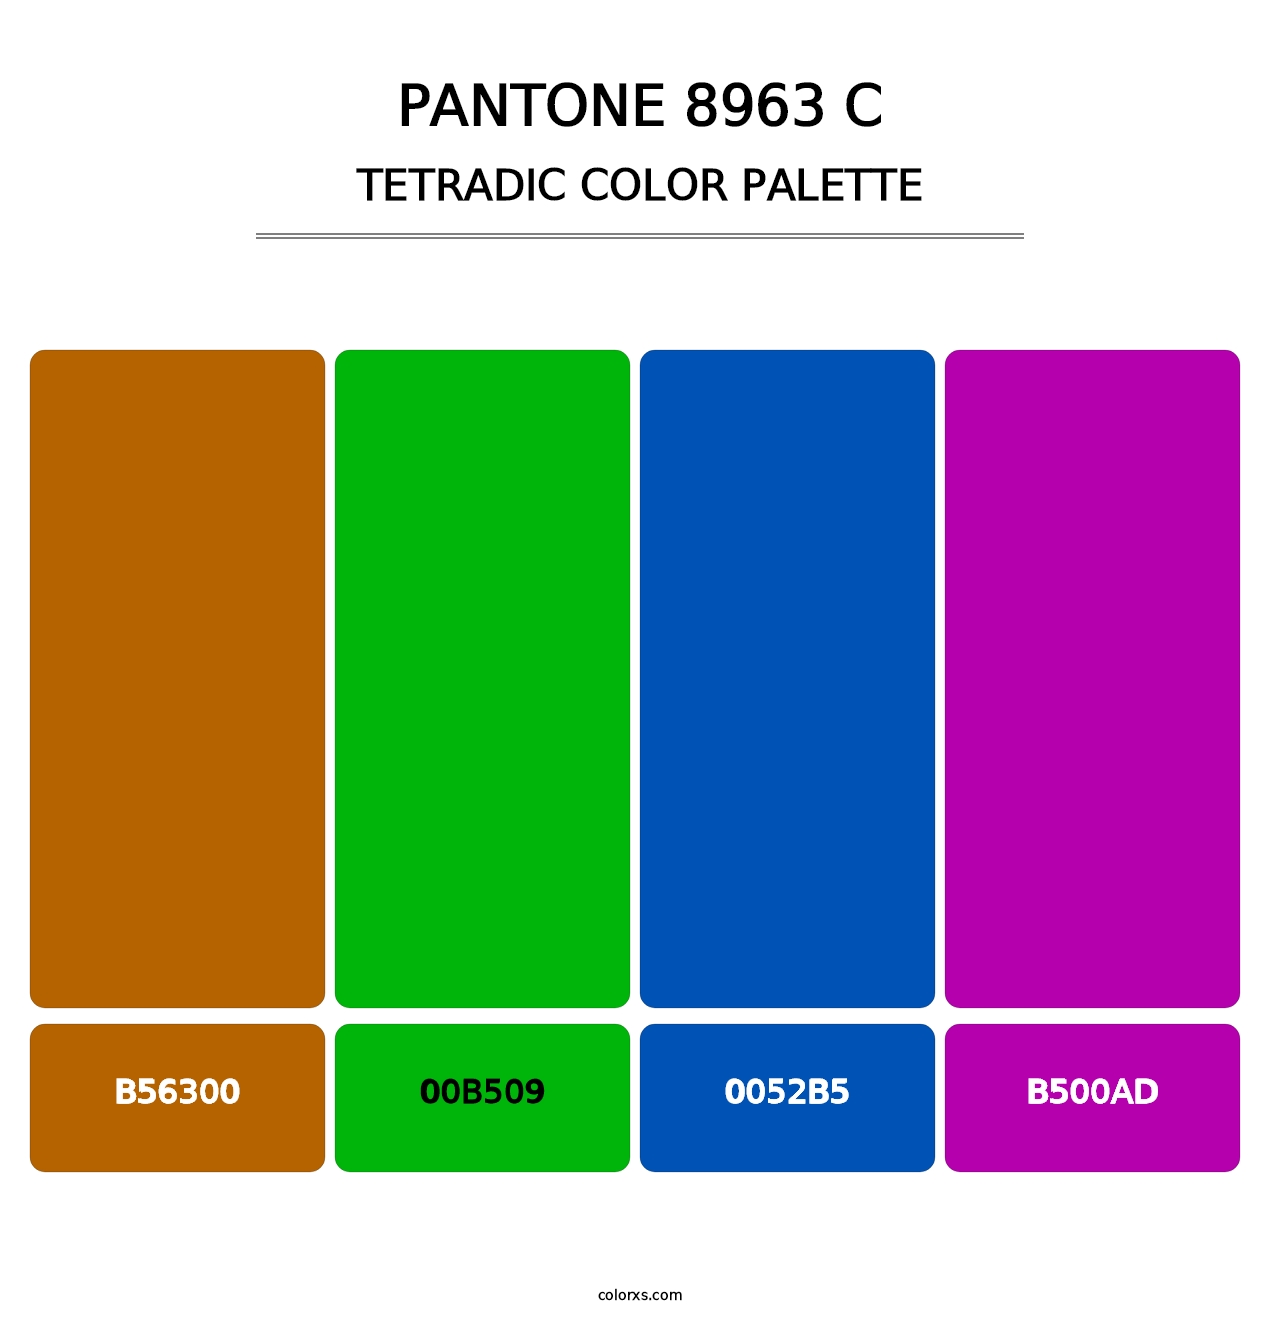 PANTONE 8963 C - Tetradic Color Palette